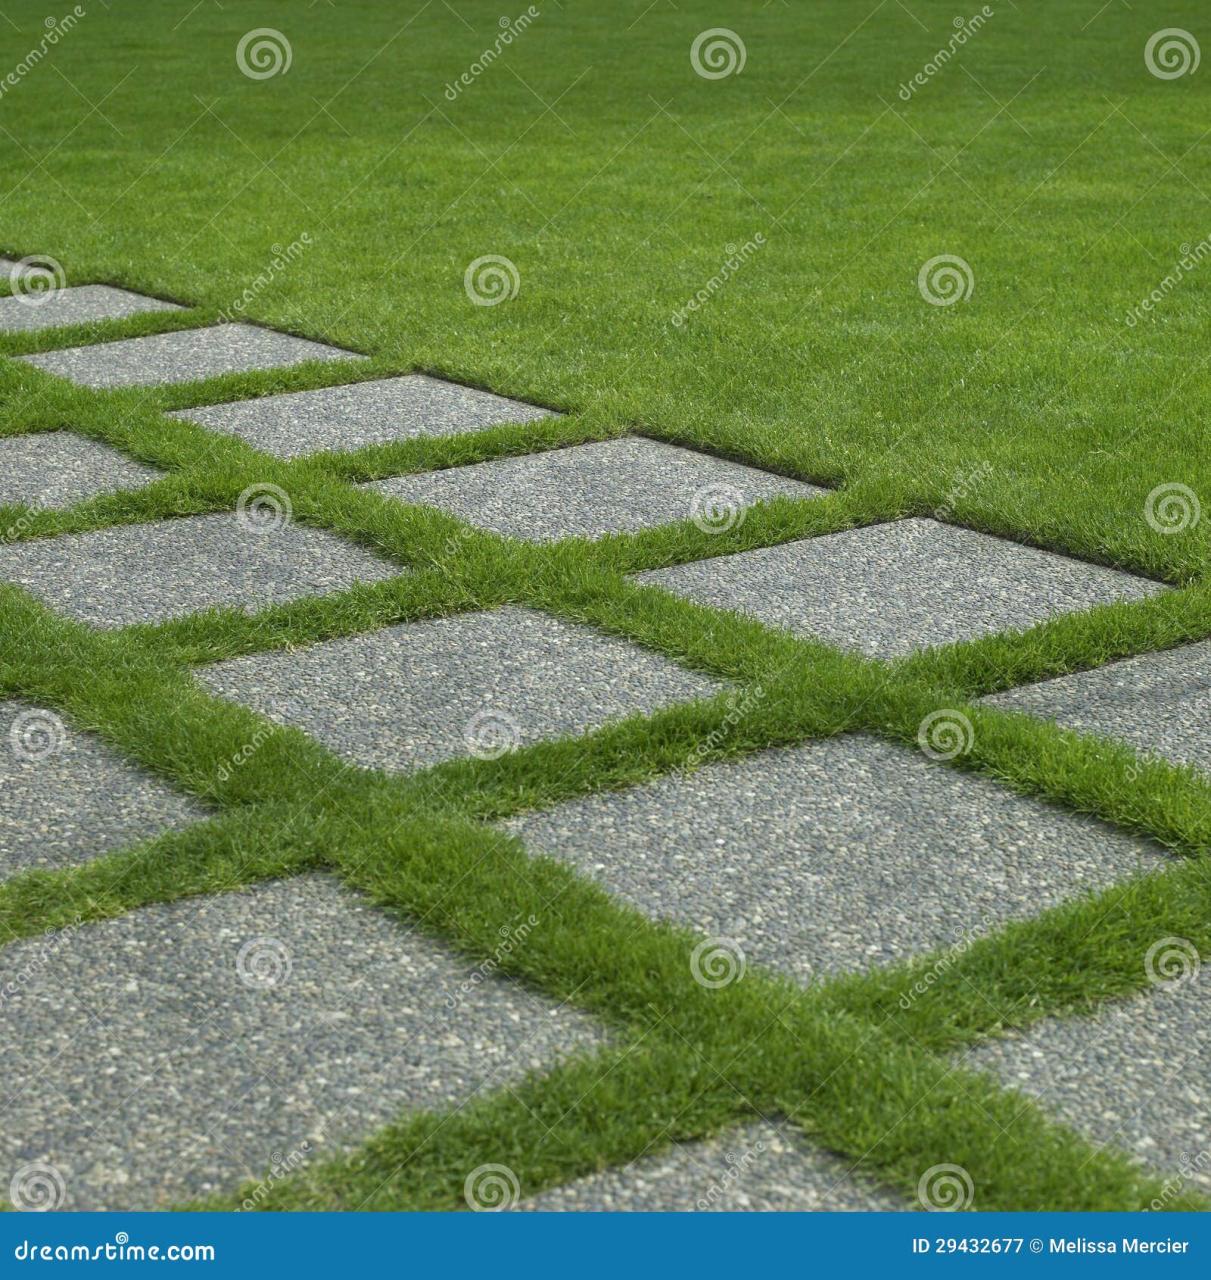 Manicured grass stock image. Image of manicure, line - 29432677